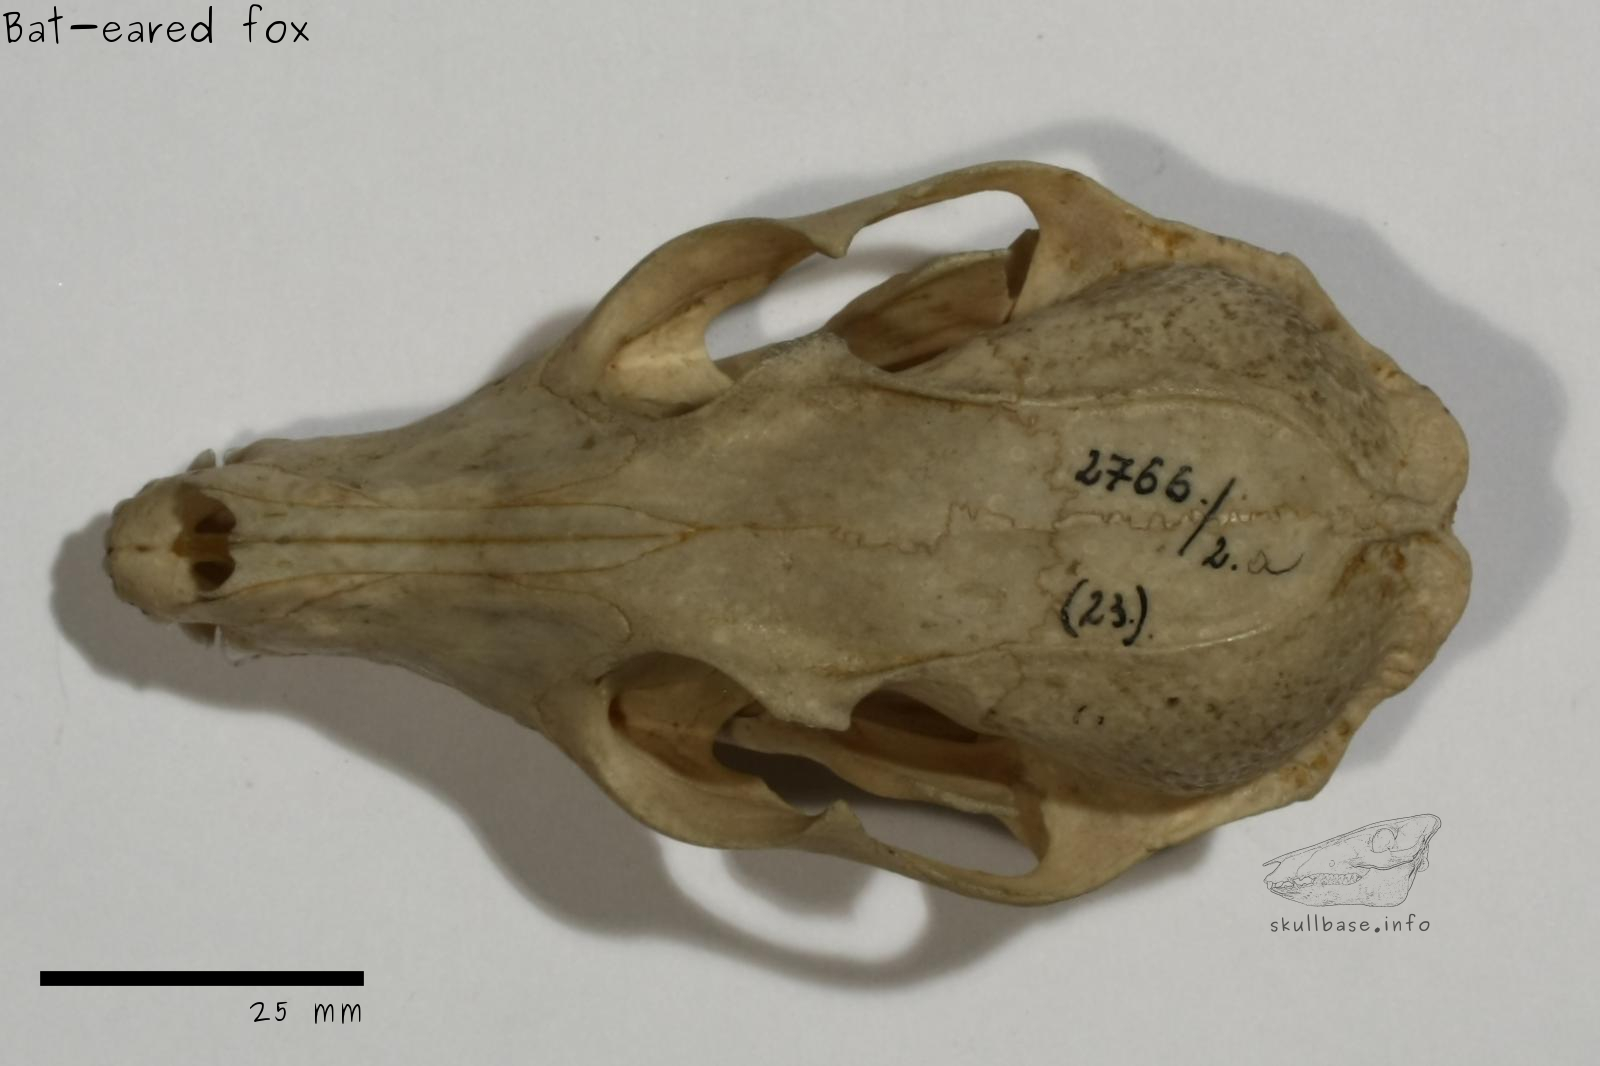 Bat-eared fox (Otocyon megalotis) skull dorsal view